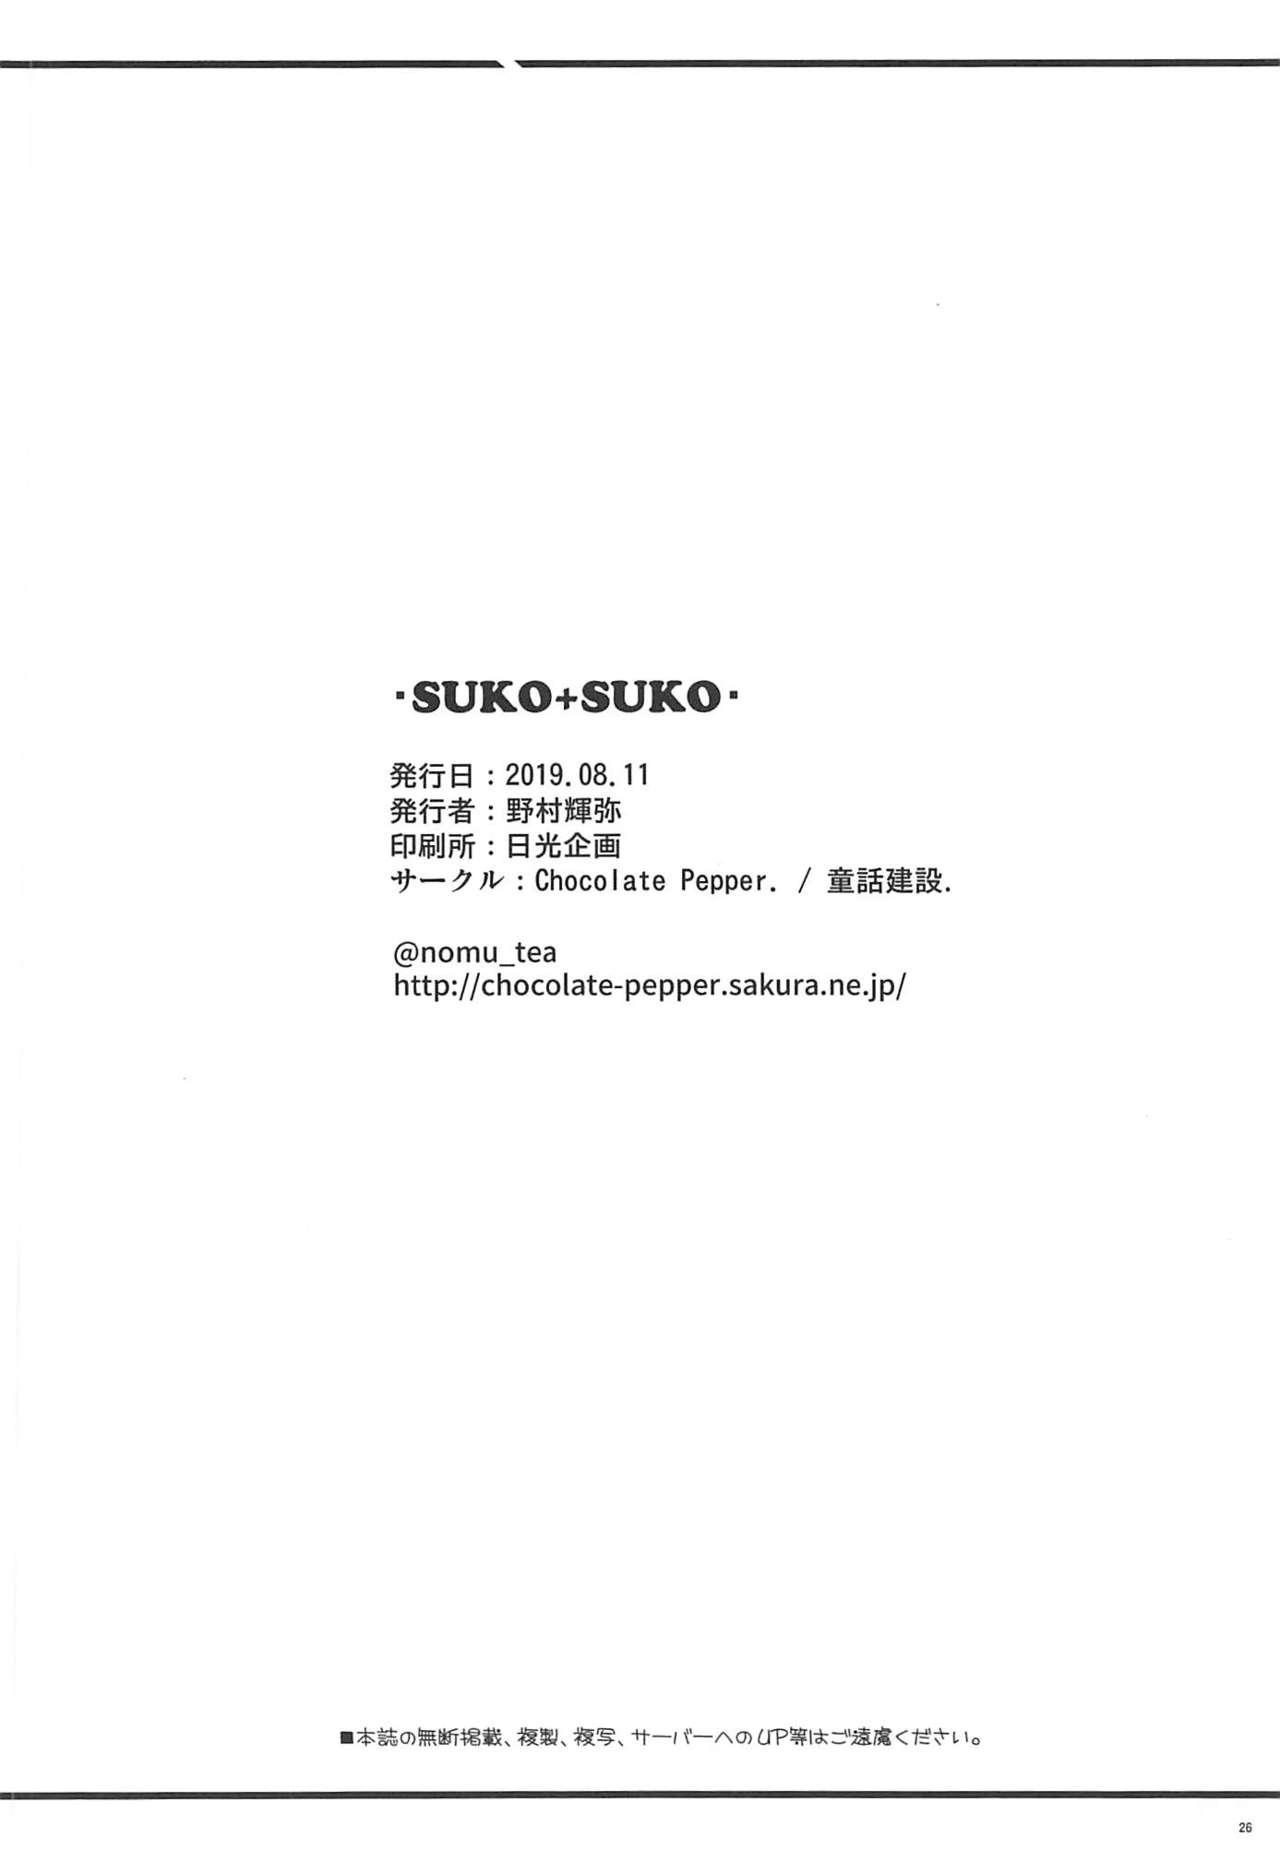 SUKO + SUKO 25